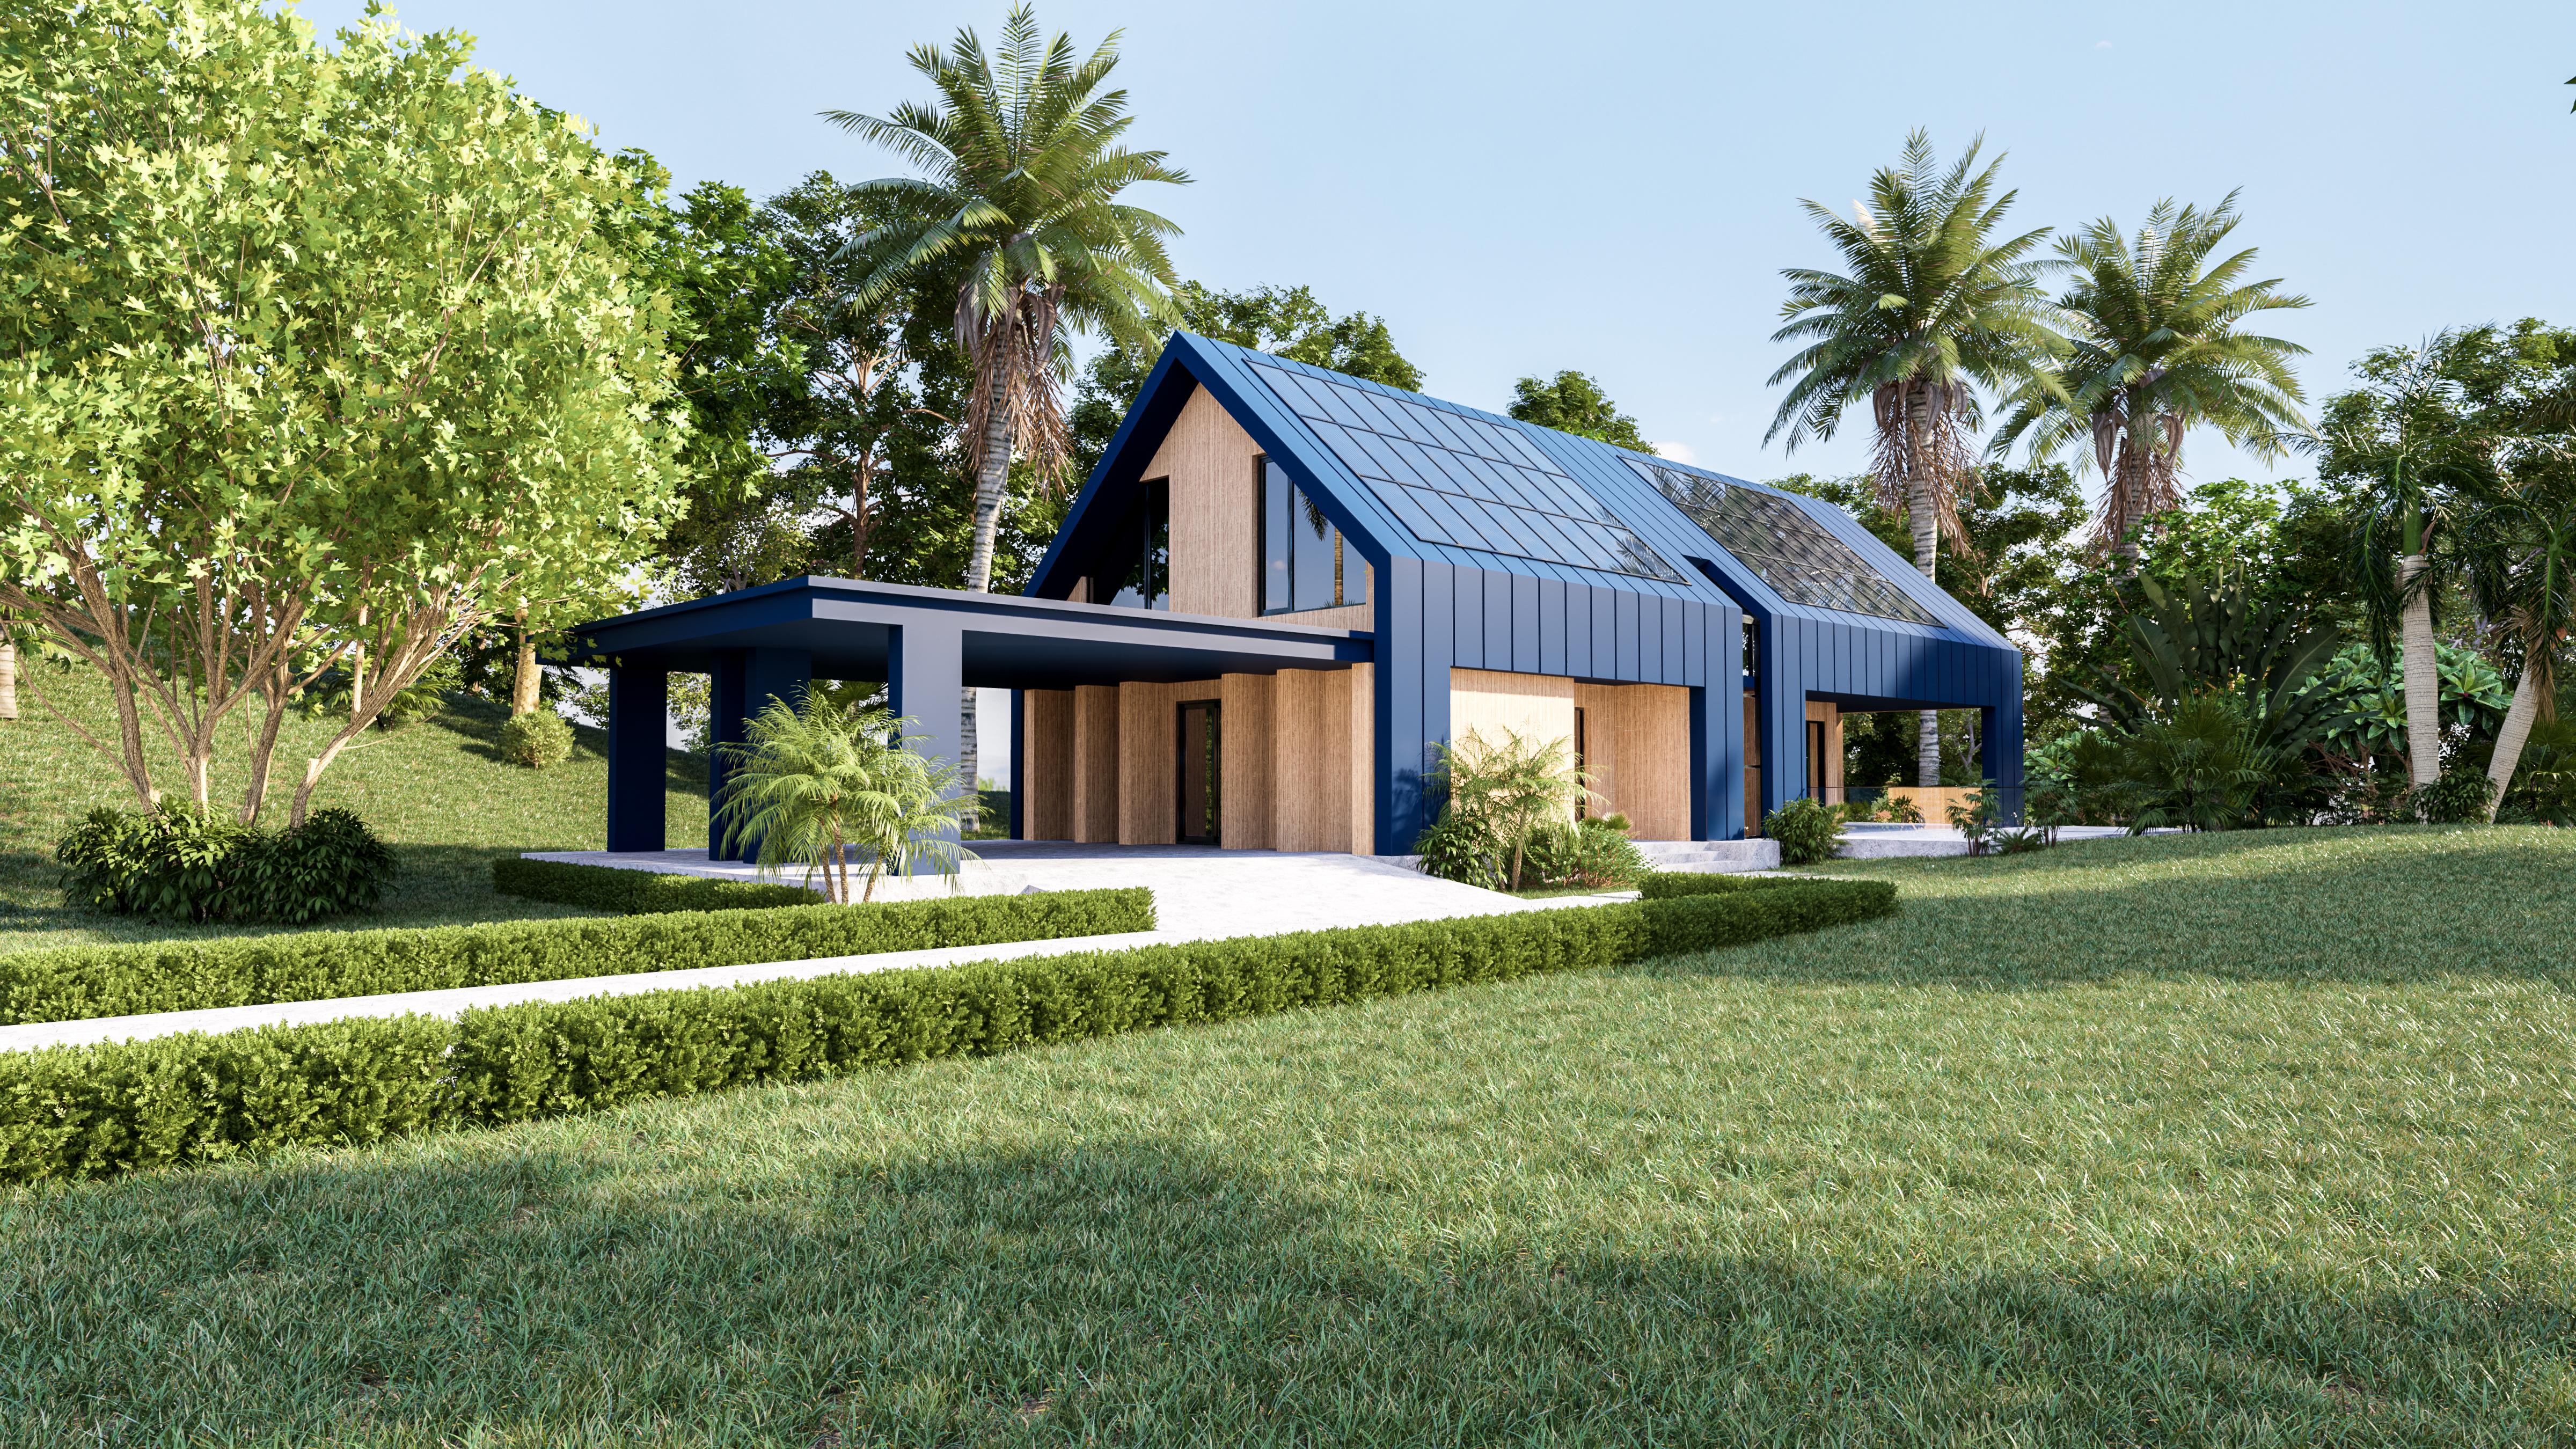 solar-panels-roof-modern-house-harvesting-renewable-energy-with-solar-cell-panels-exterior-design-3d-rendering.jpg